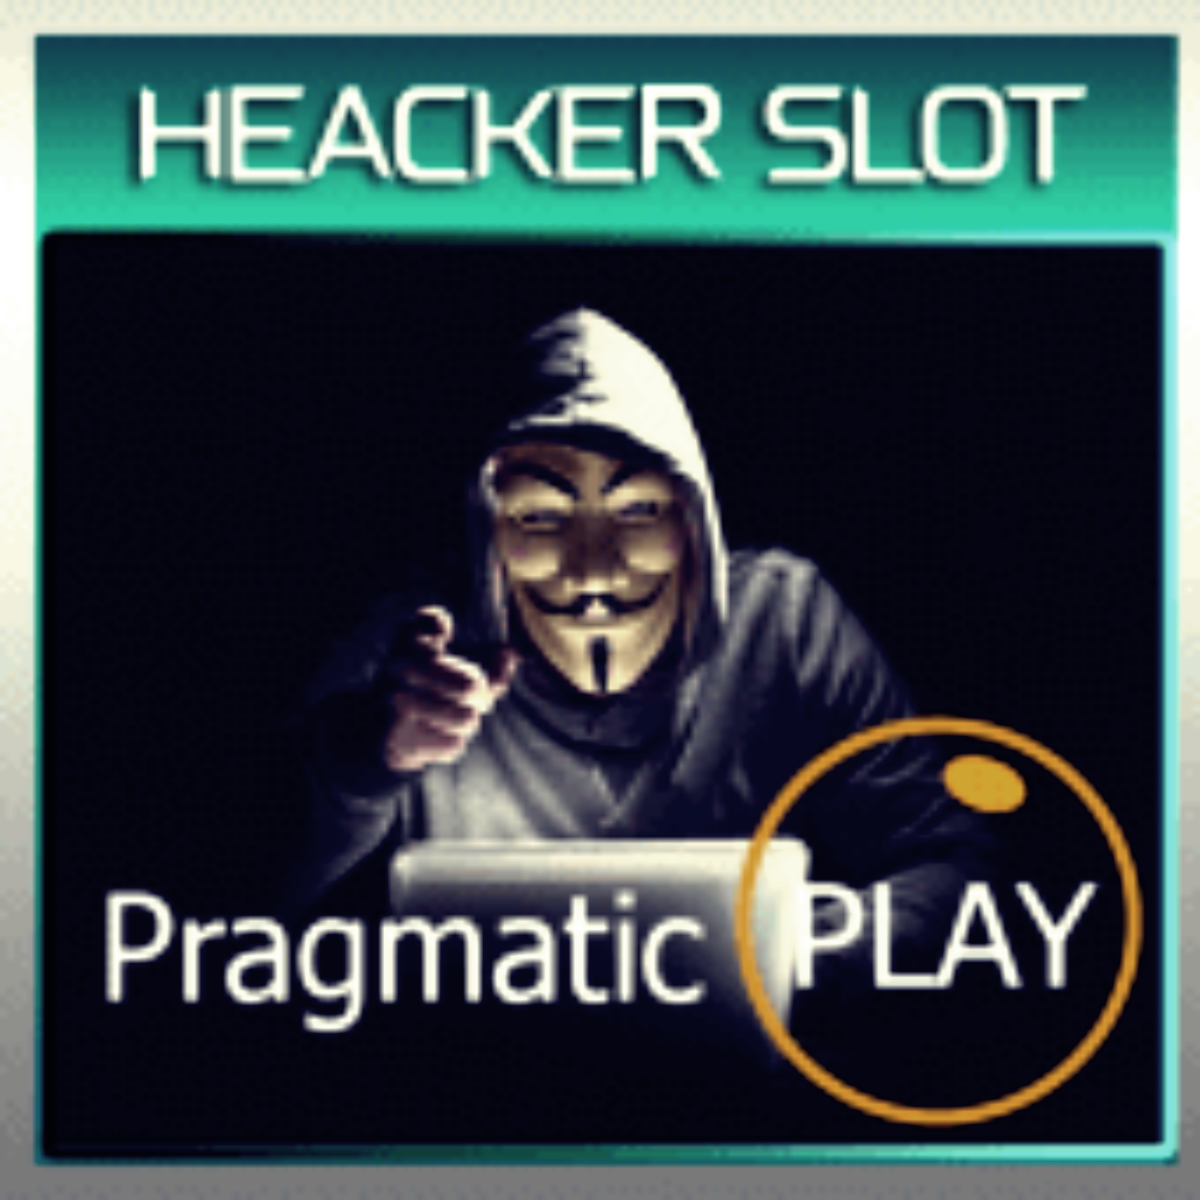 batch_heacker.slotpragmatic_1